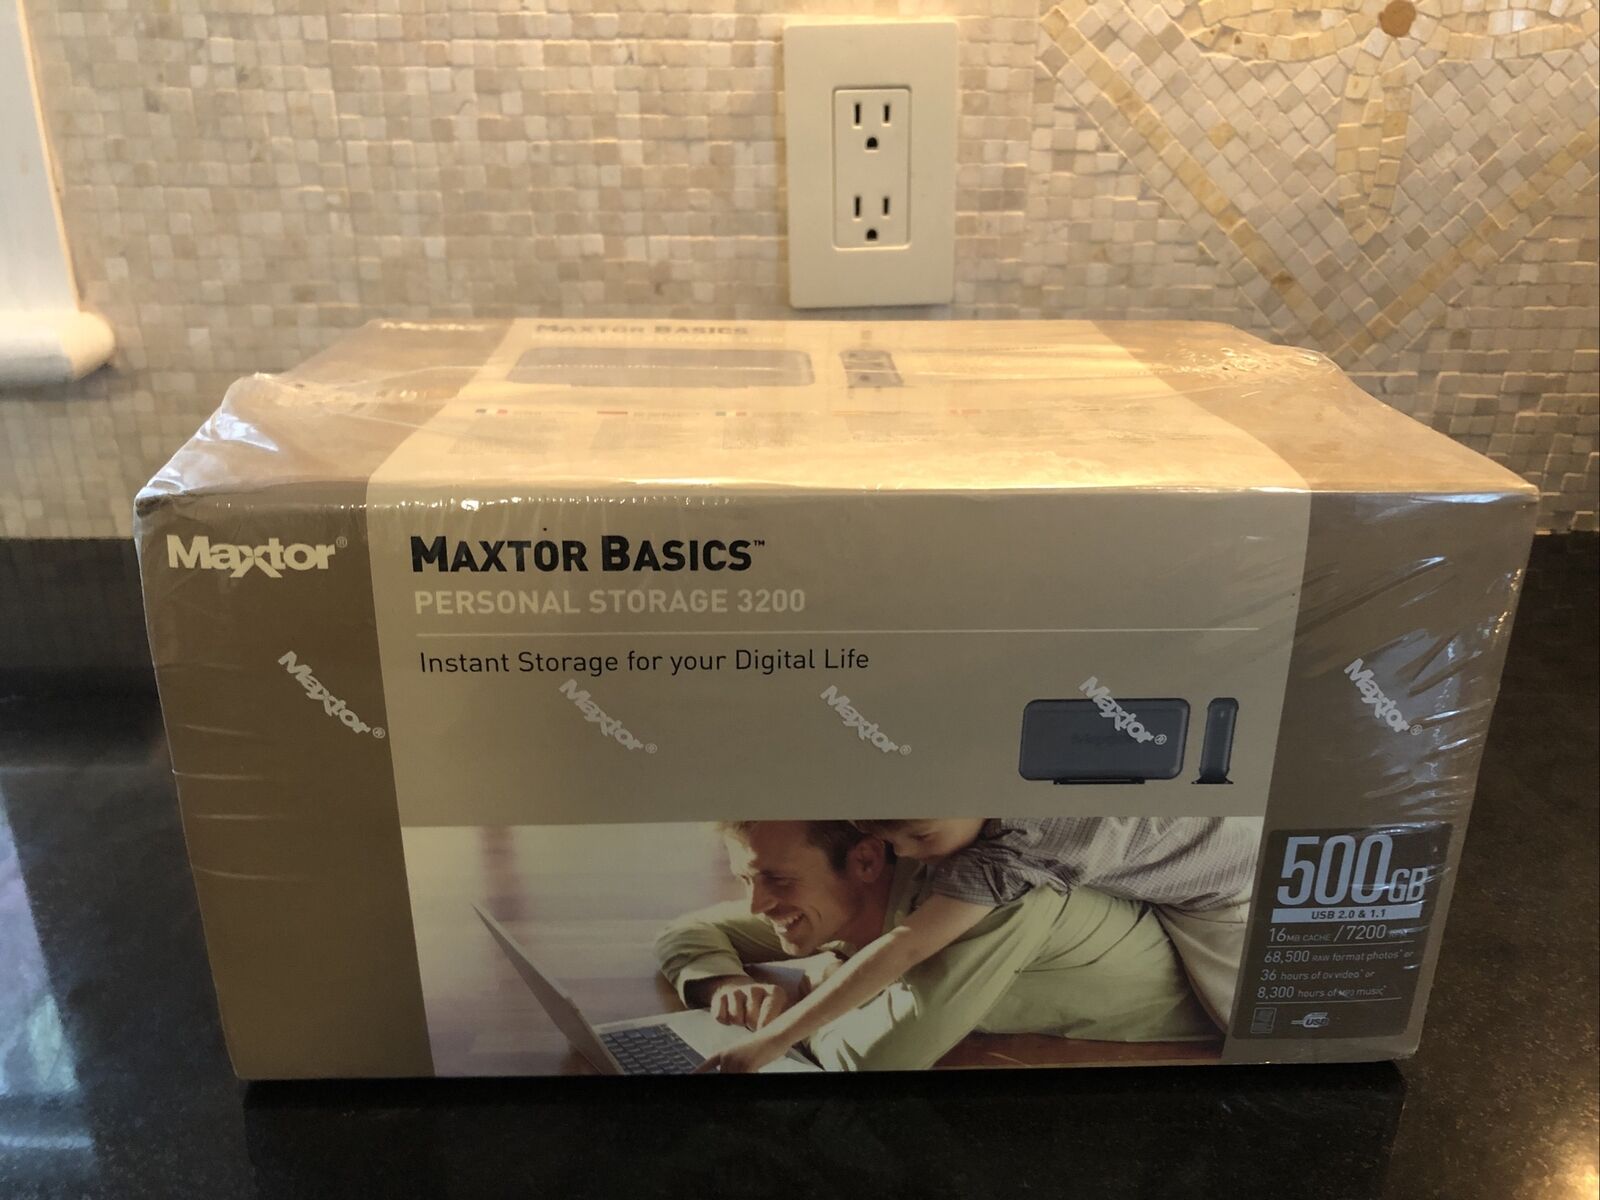 Sealed New Boxed Maxtor Basics Personal Storage 3200 External Hard Drive 500GB 